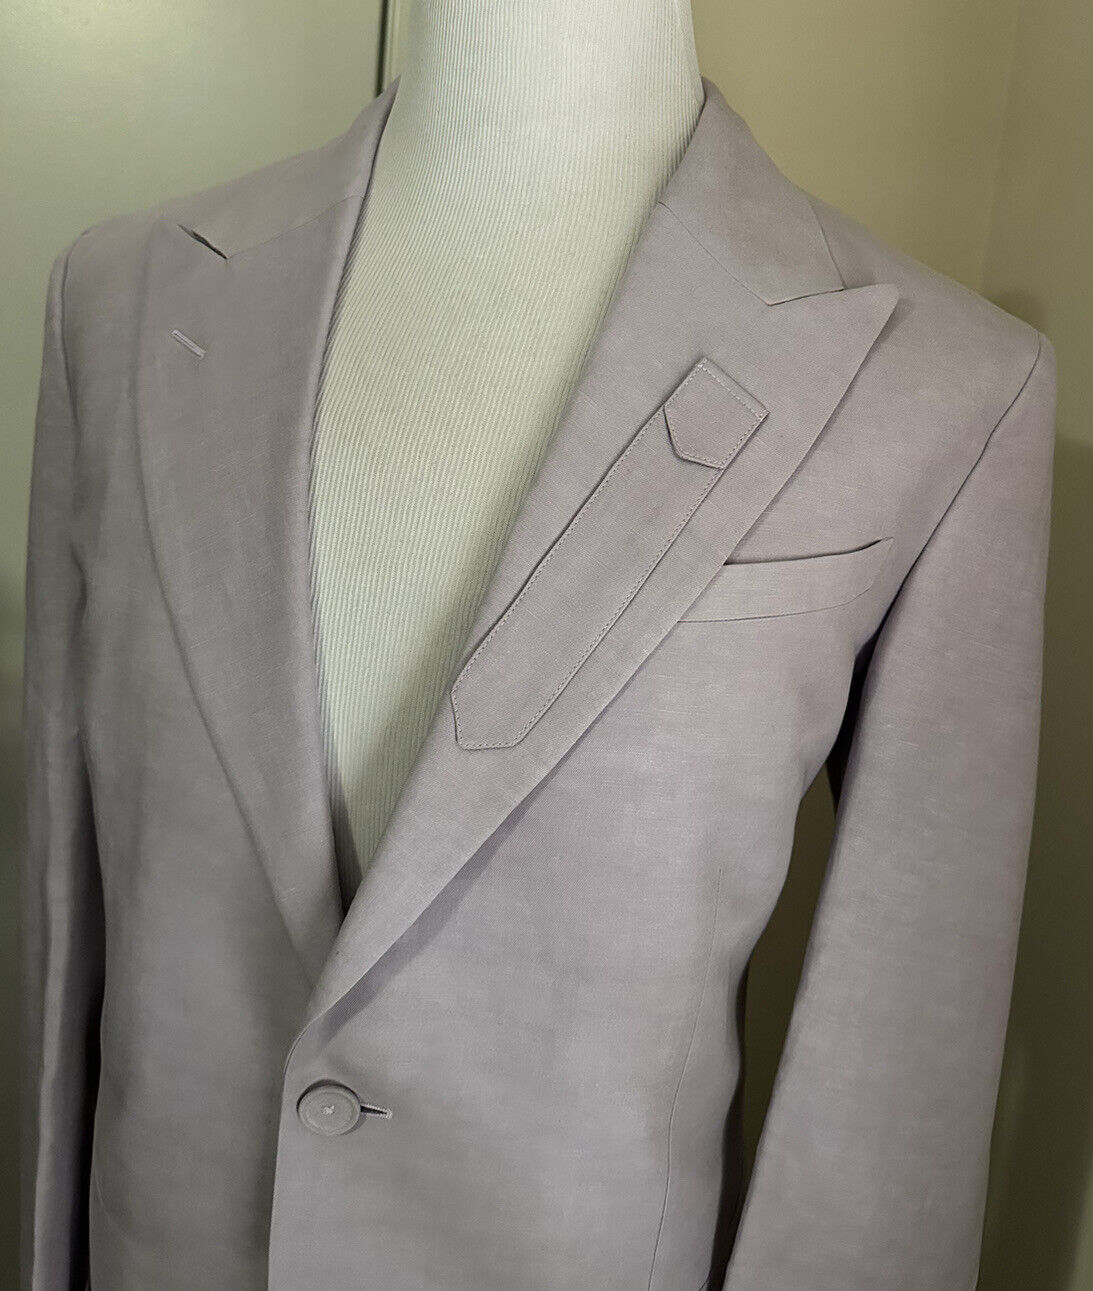 NWT $3280 Fendi Mens Sport Coat Blazer Mid Pink 40R US/50R Eu Italy